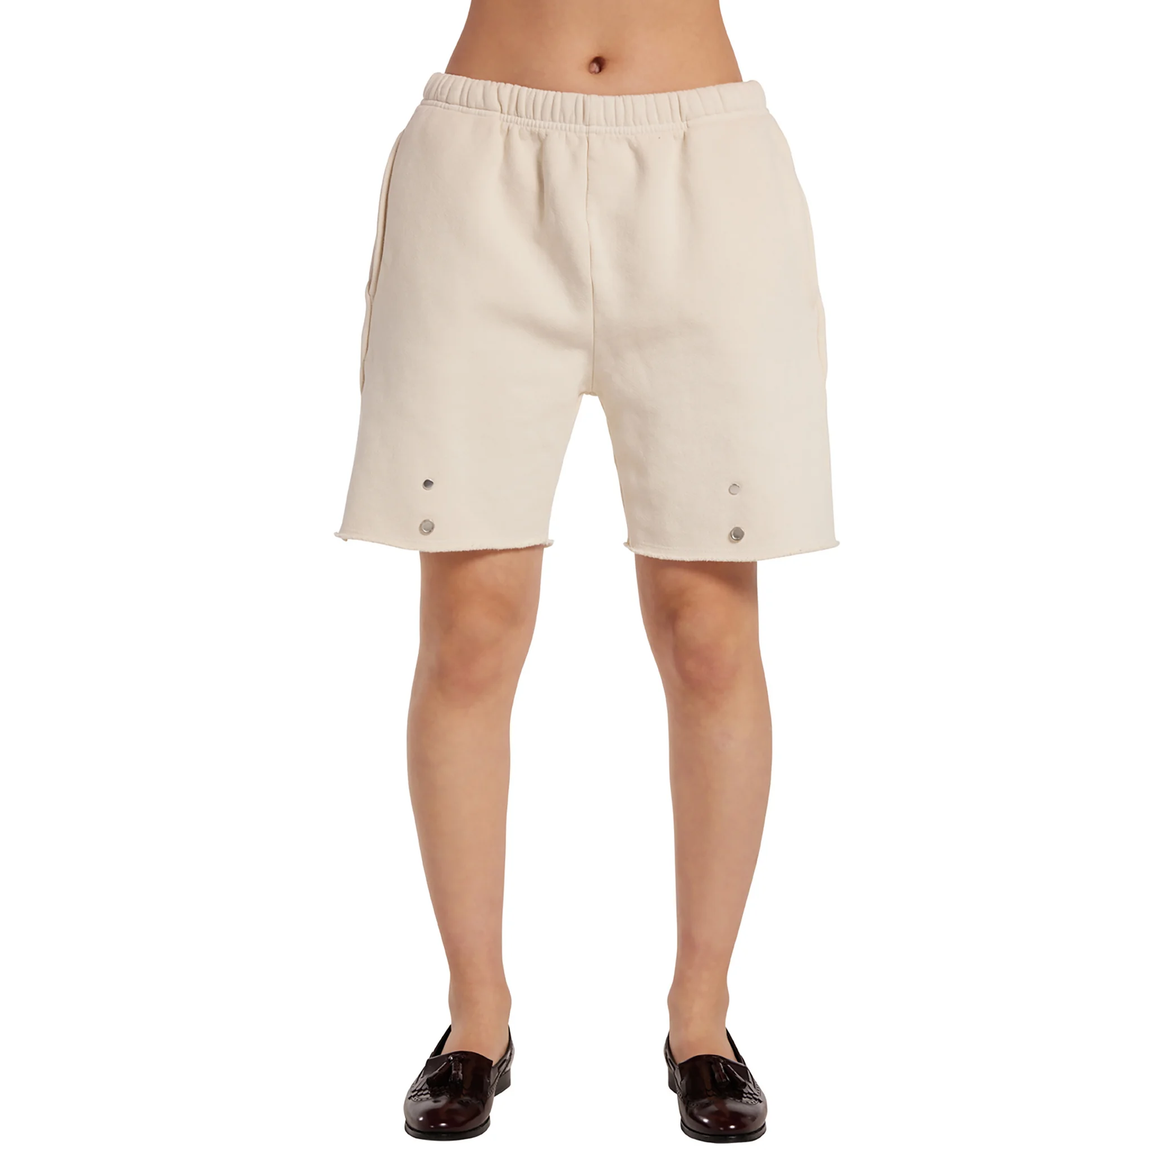 Les Tien Snap Front Shorts (Ivory) - Les Tien Snap Front Shorts (Ivory) - 